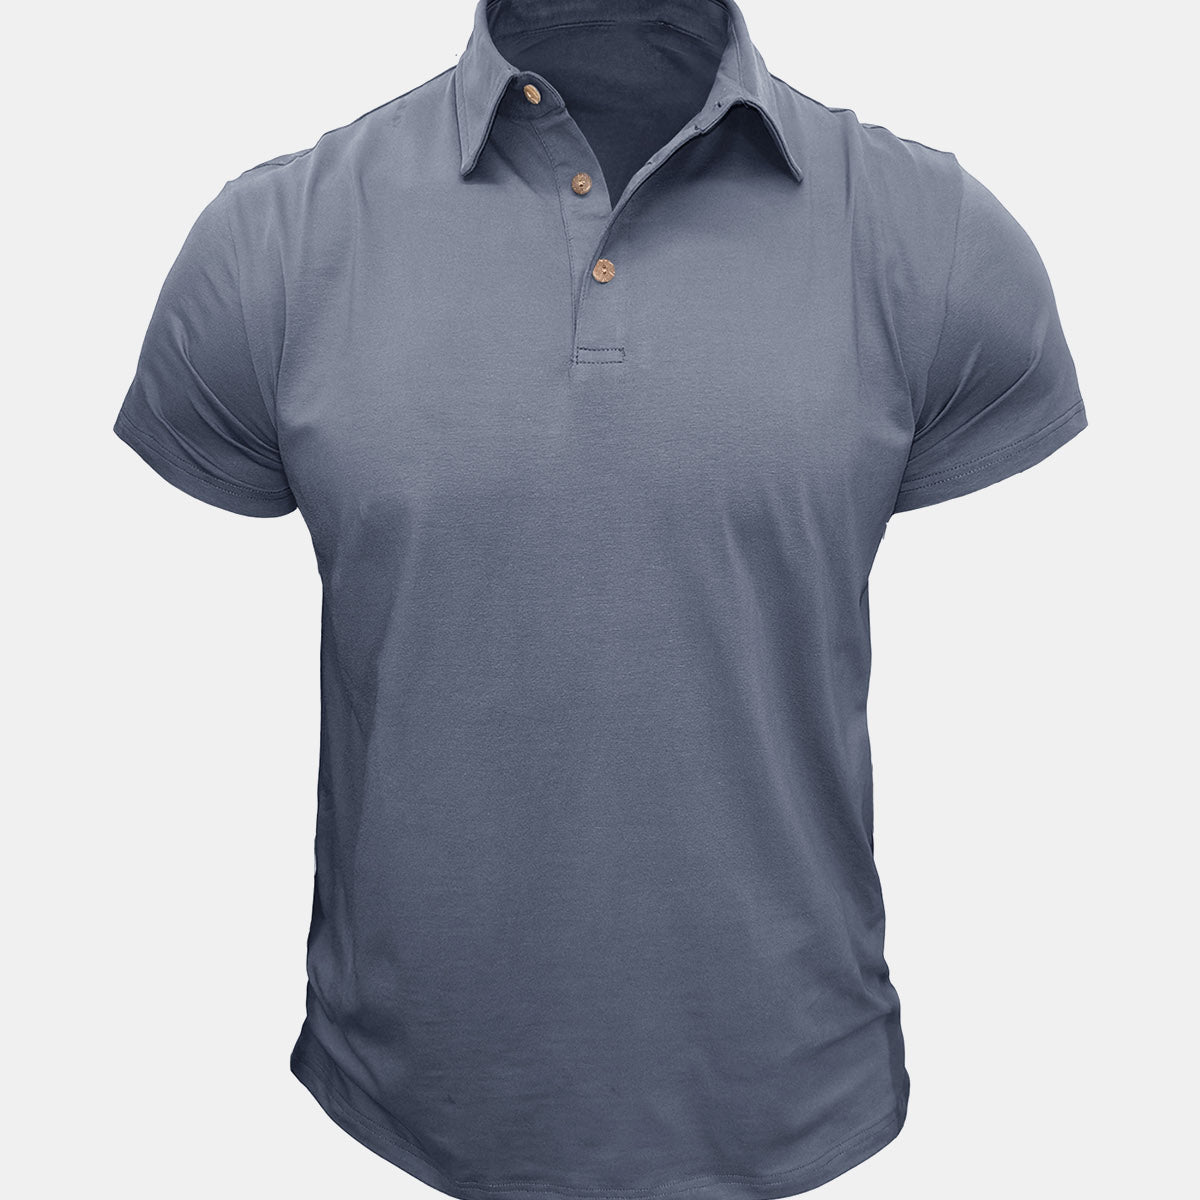 Men's Leisure Summer Breathable Cotton Short Sleeve Polo Shirt